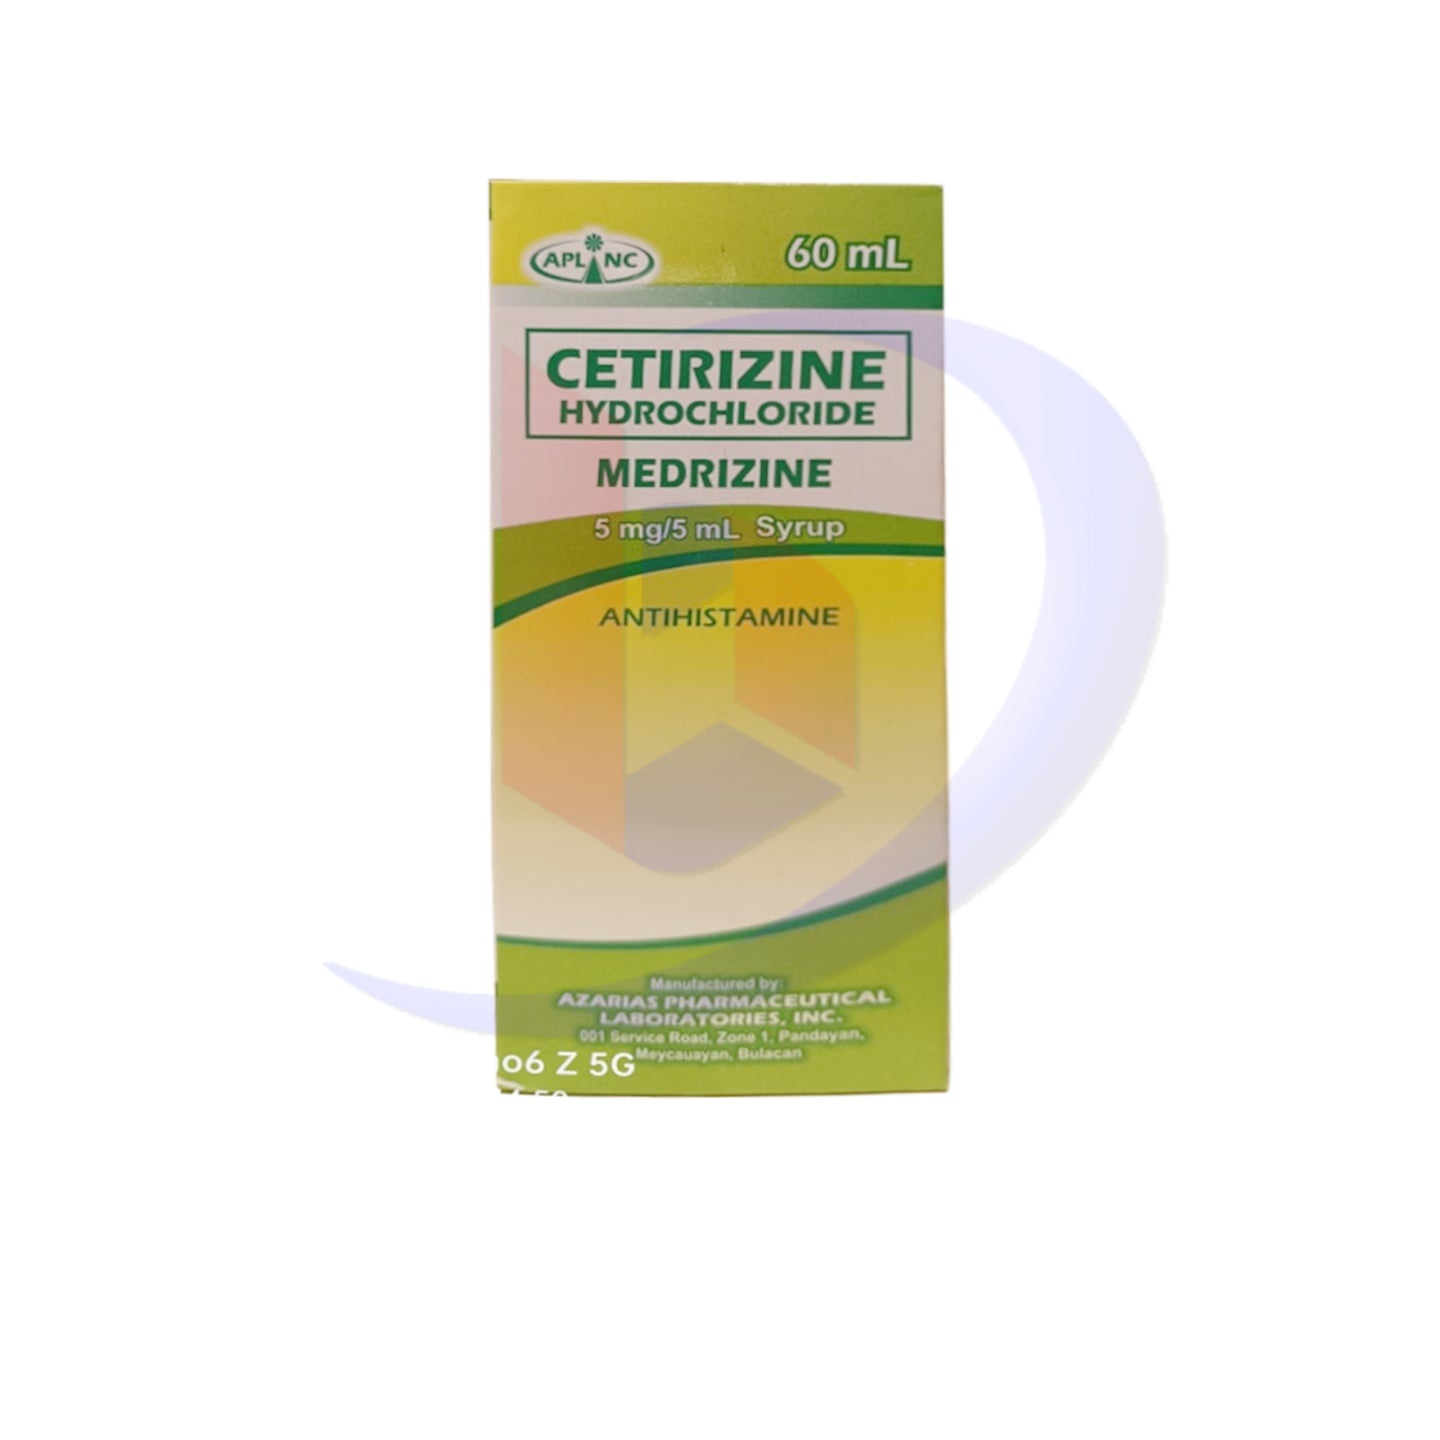 Cetirizine Hydrochloride (Medrizine) 5mg/5ml Syrup 60ml